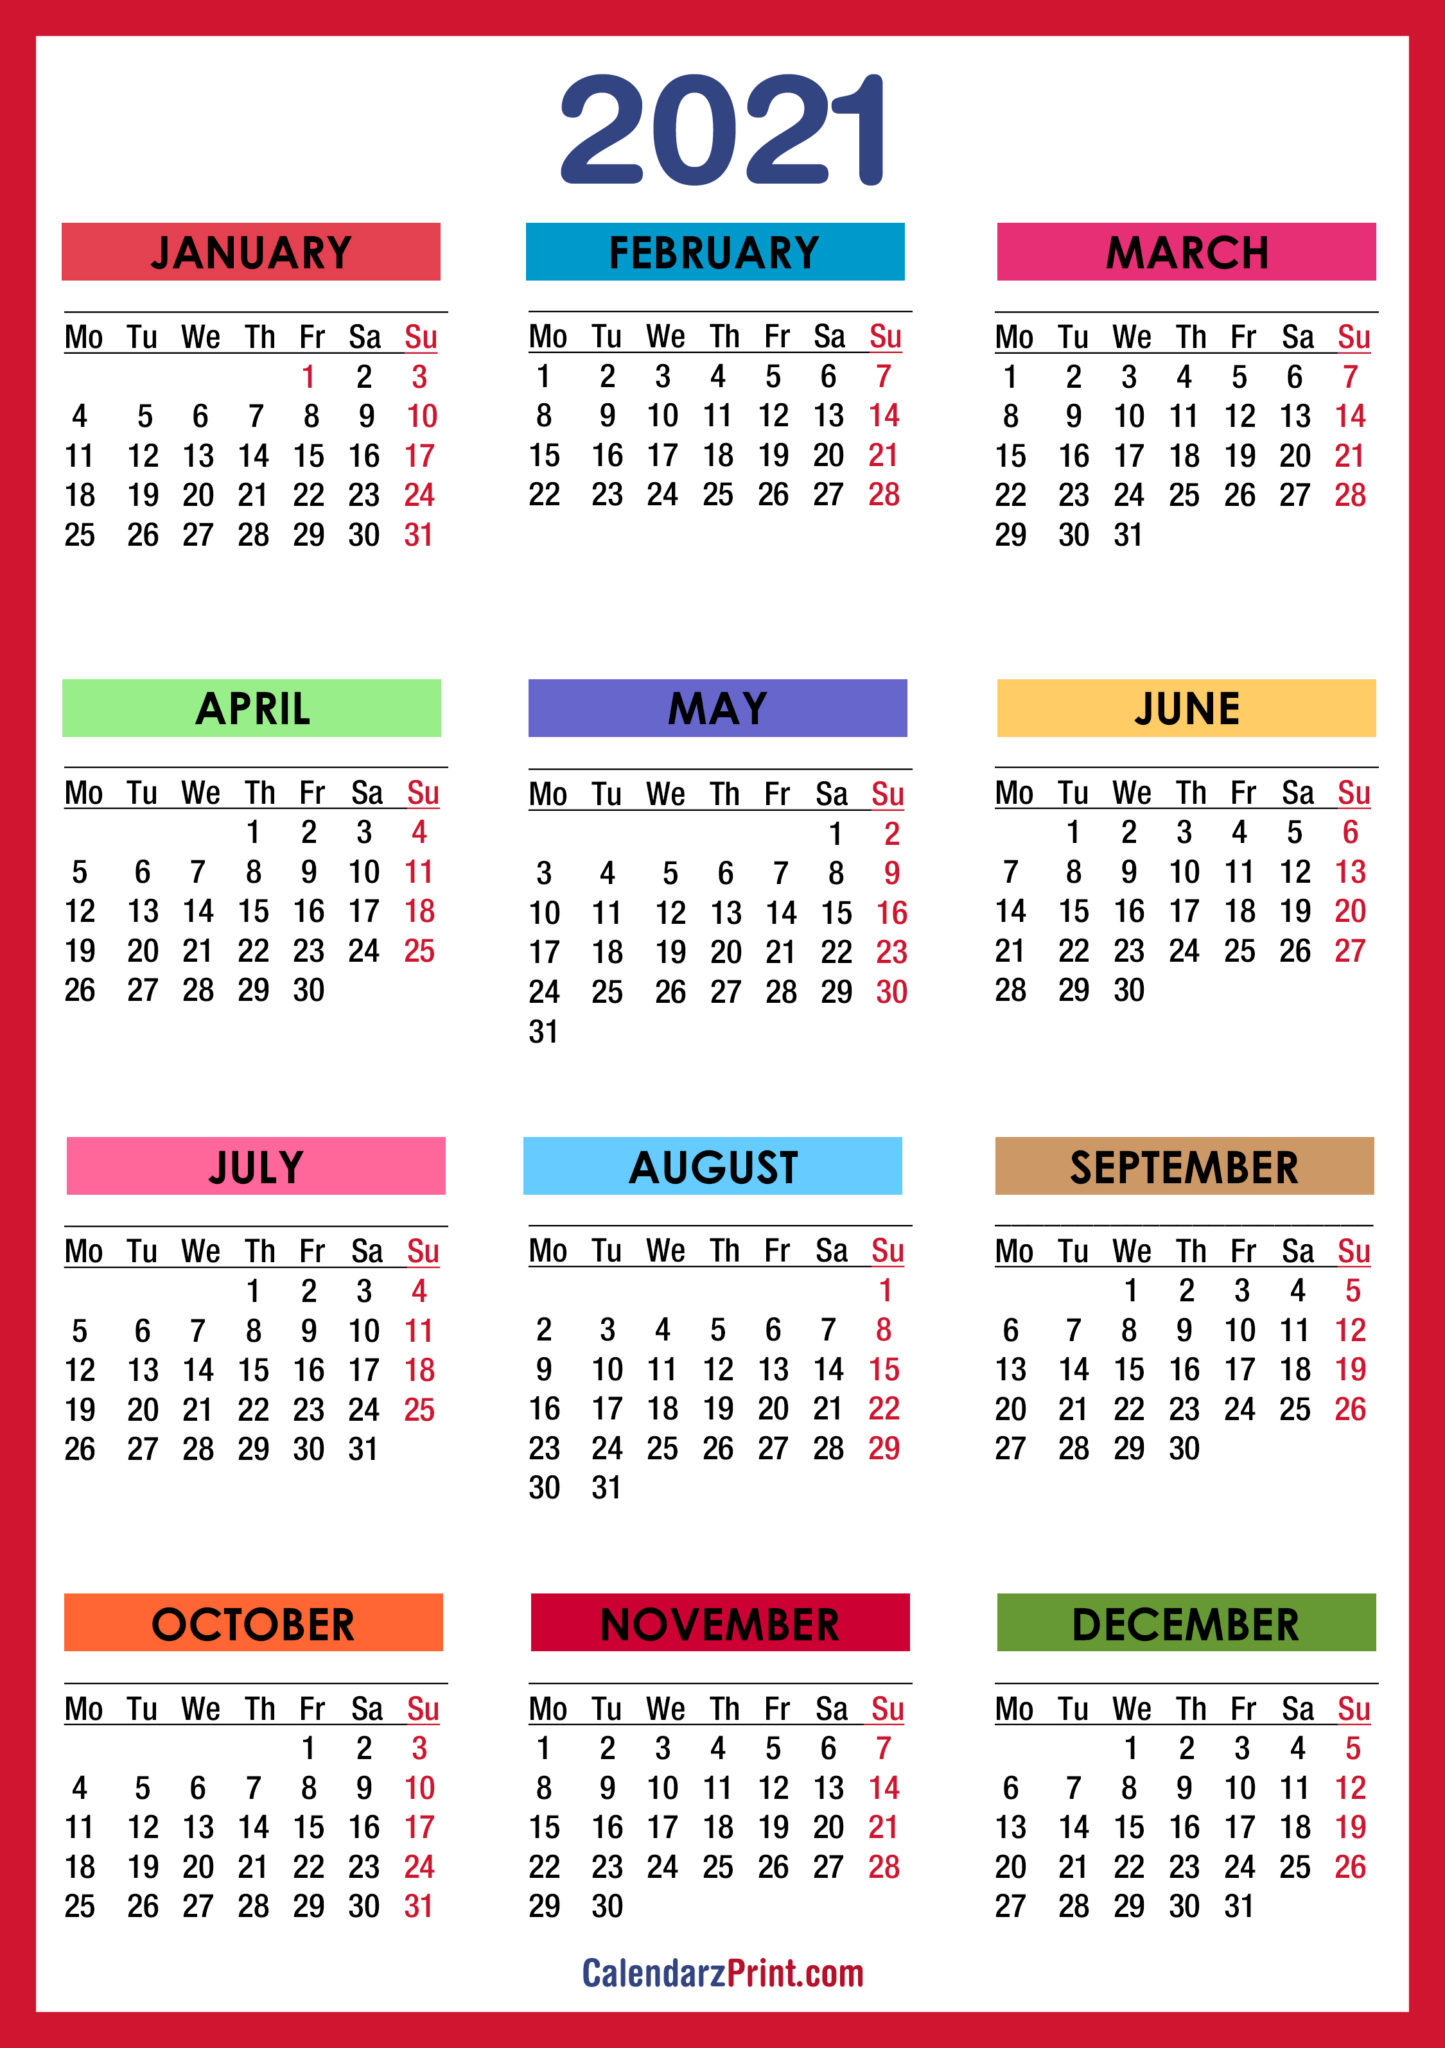 free-printable-2021-floral-calendar-monday-start-paper-trail-design